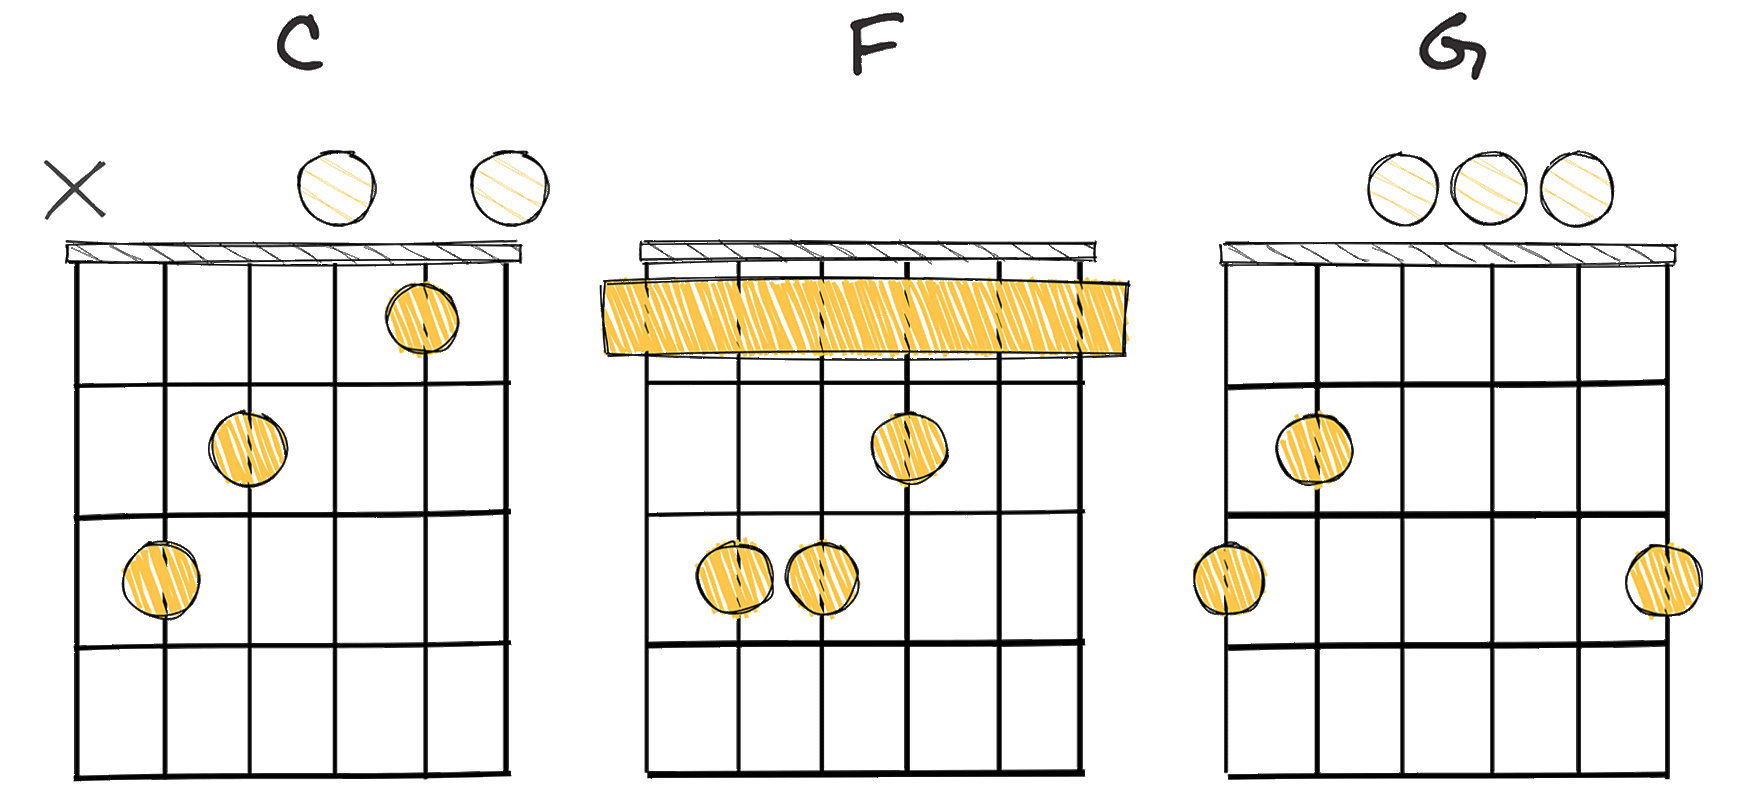 I - IV - V (1-4-5) chords diagram